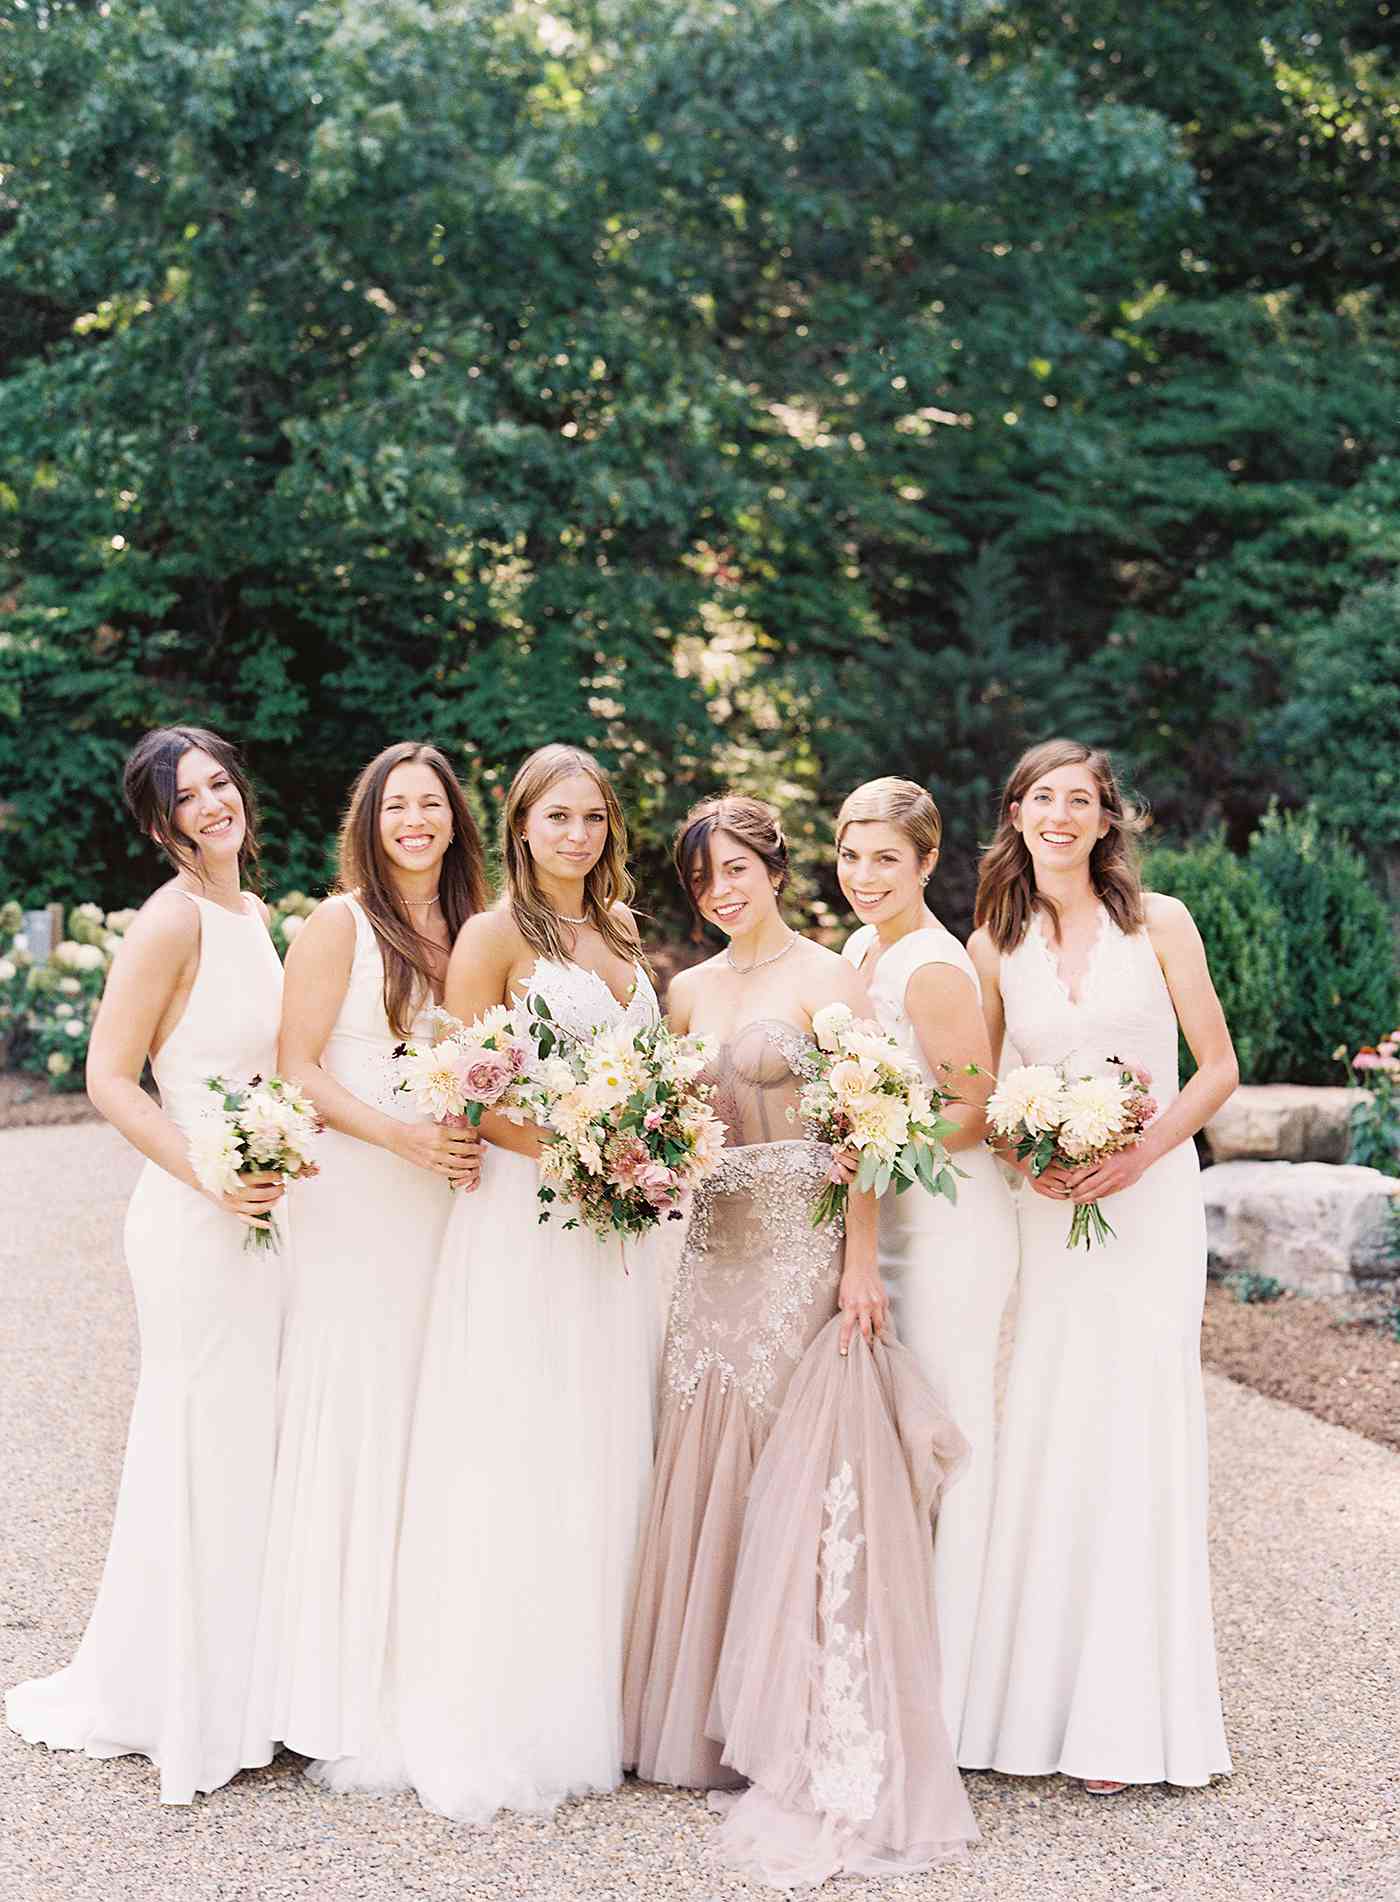 All-White Bridesmaids' Dresses